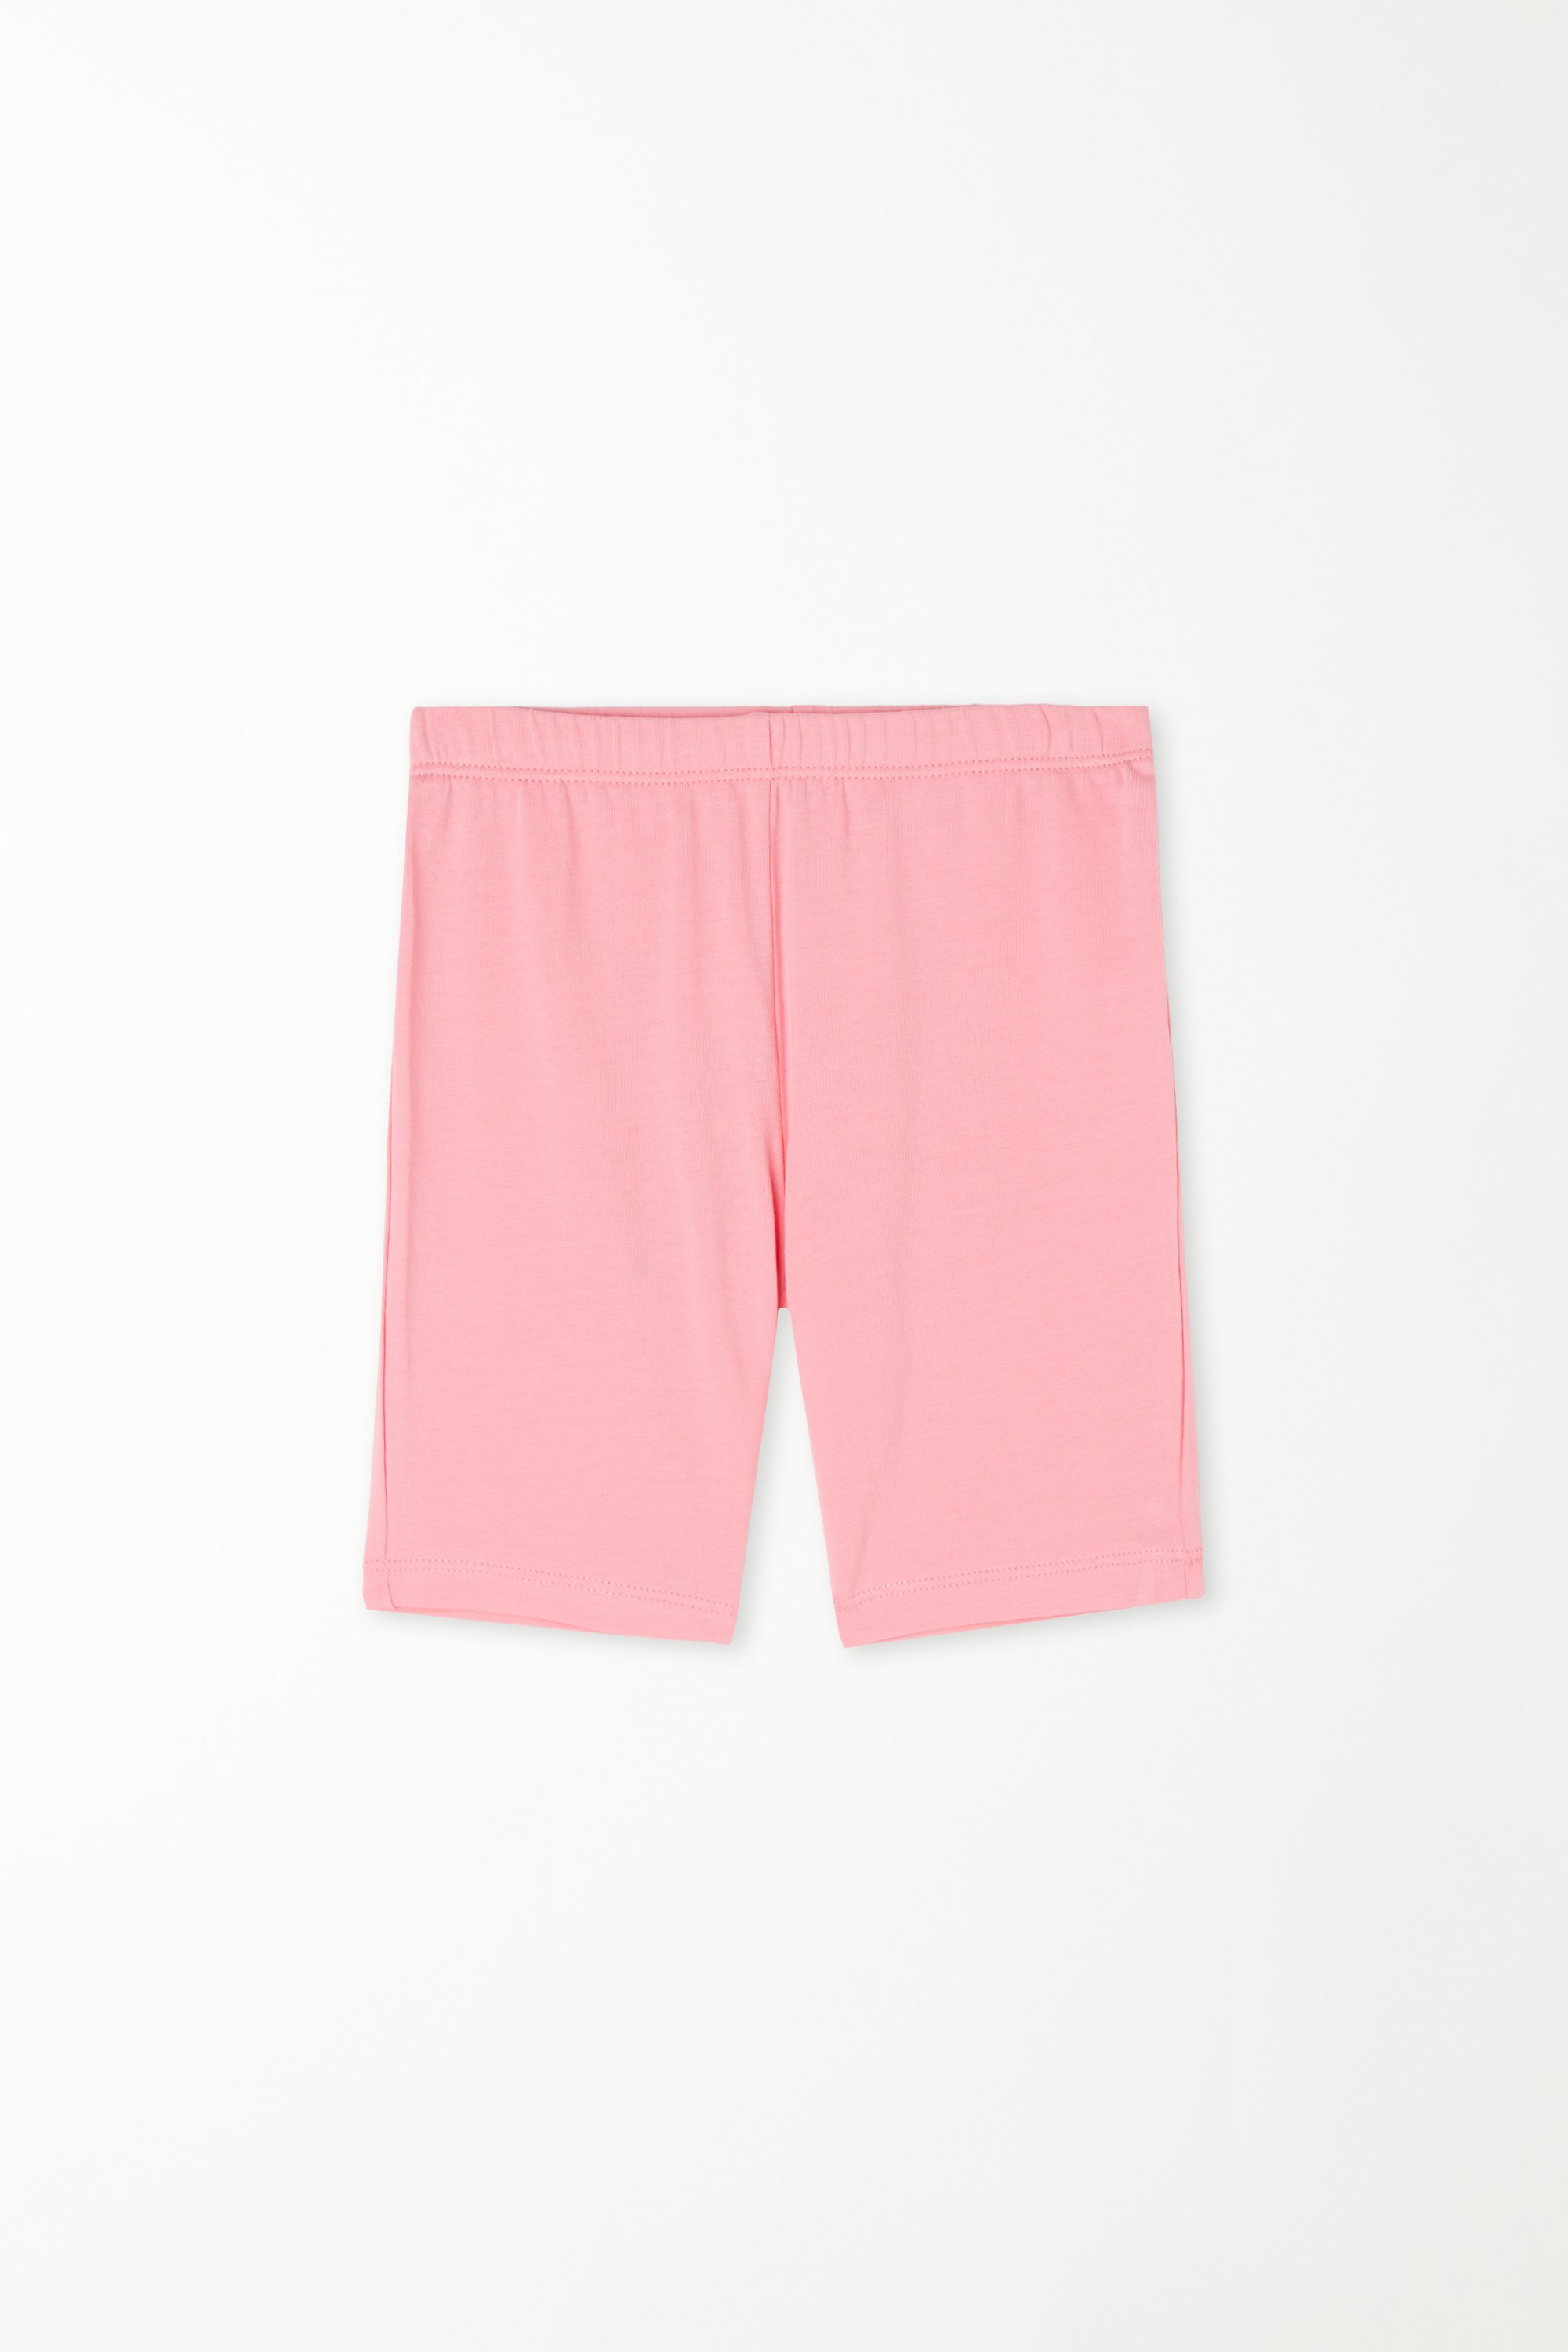 Girls’ Plain Colour Cotton Cycling Shorts